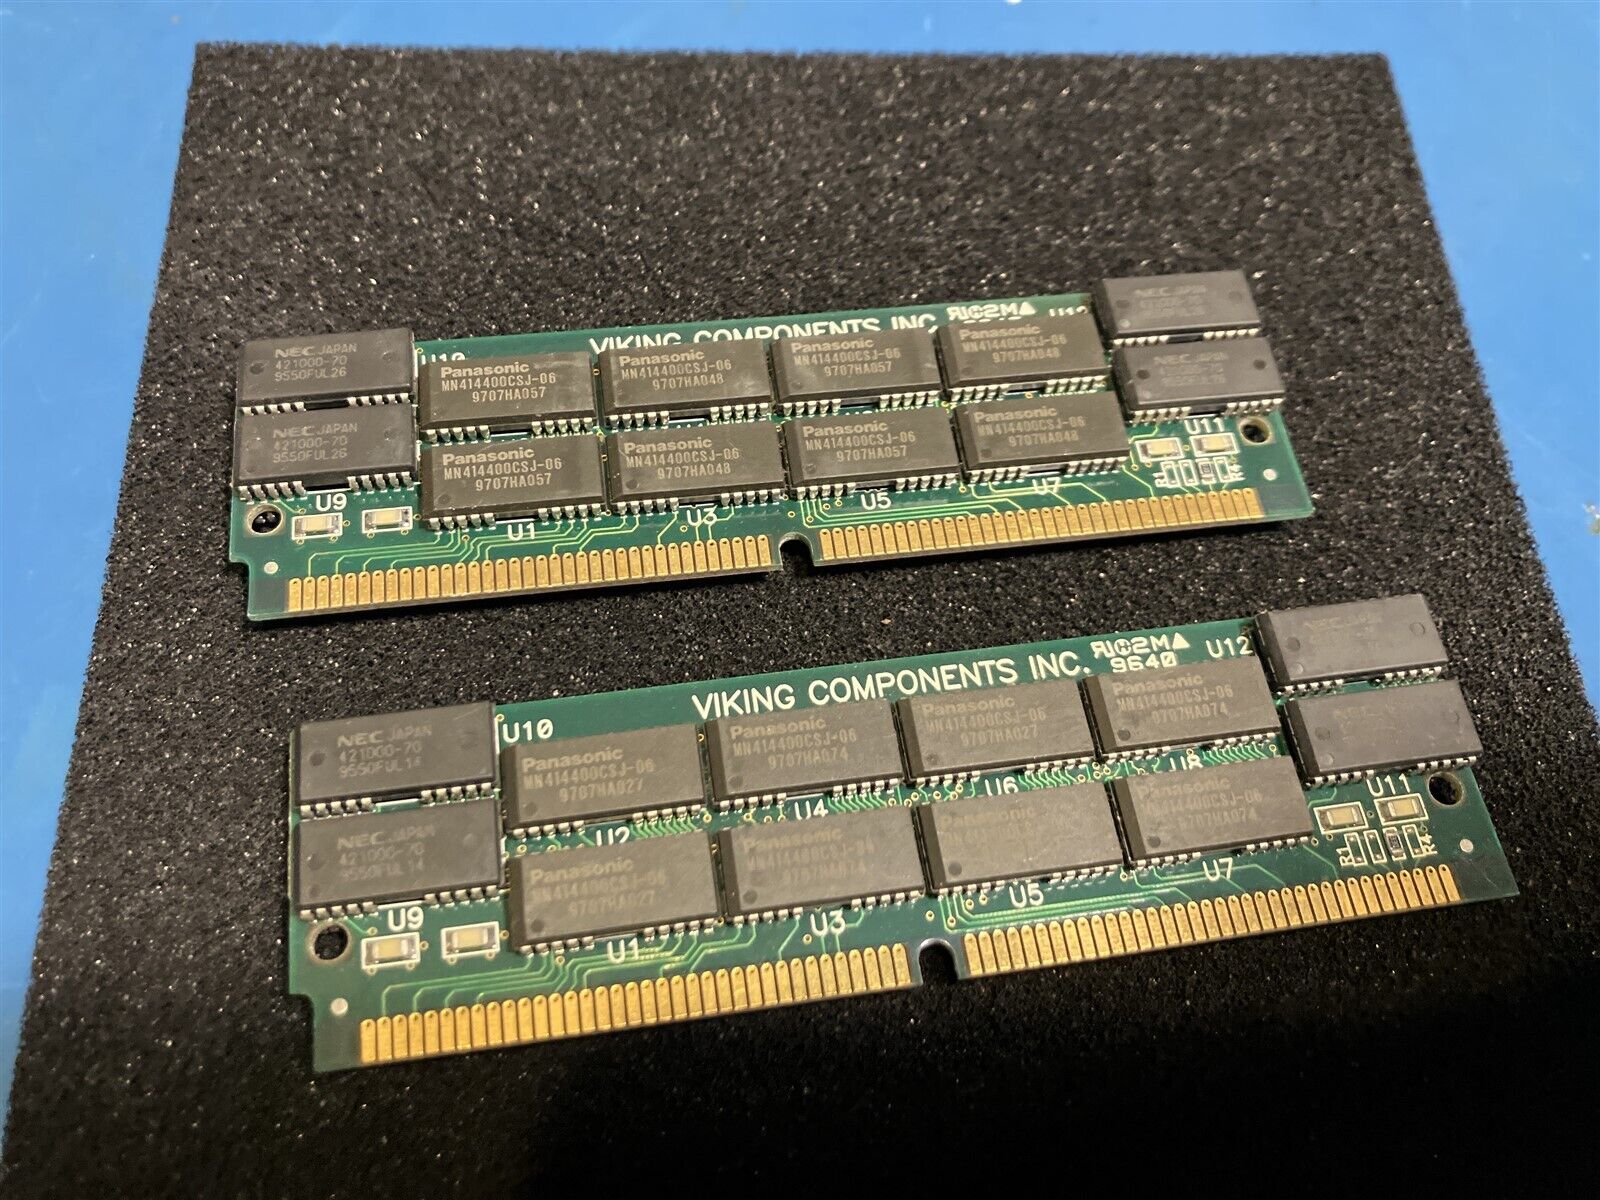 2x Viking GOLD 8MB 2Mx36 Parity RAM 72-Pin FPM SIMM 16MB RAM Memory Fast Page